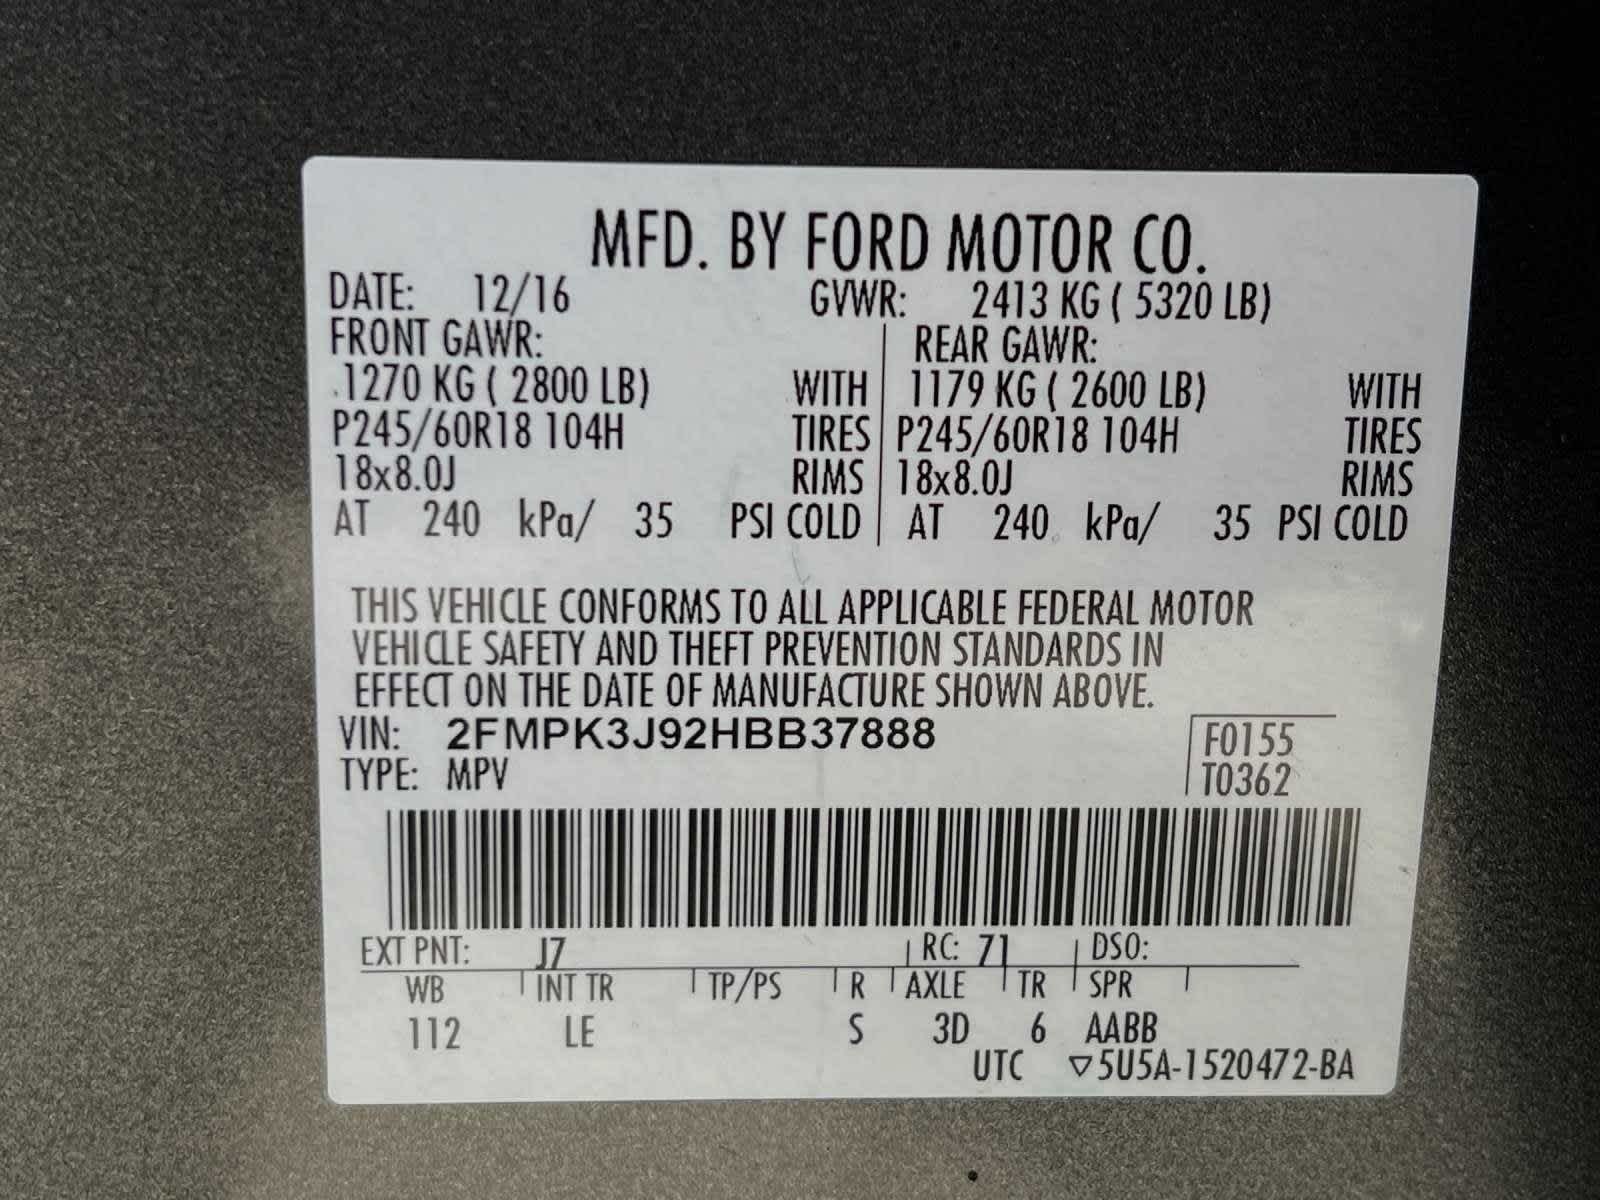 2017 Ford Edge SEL 28